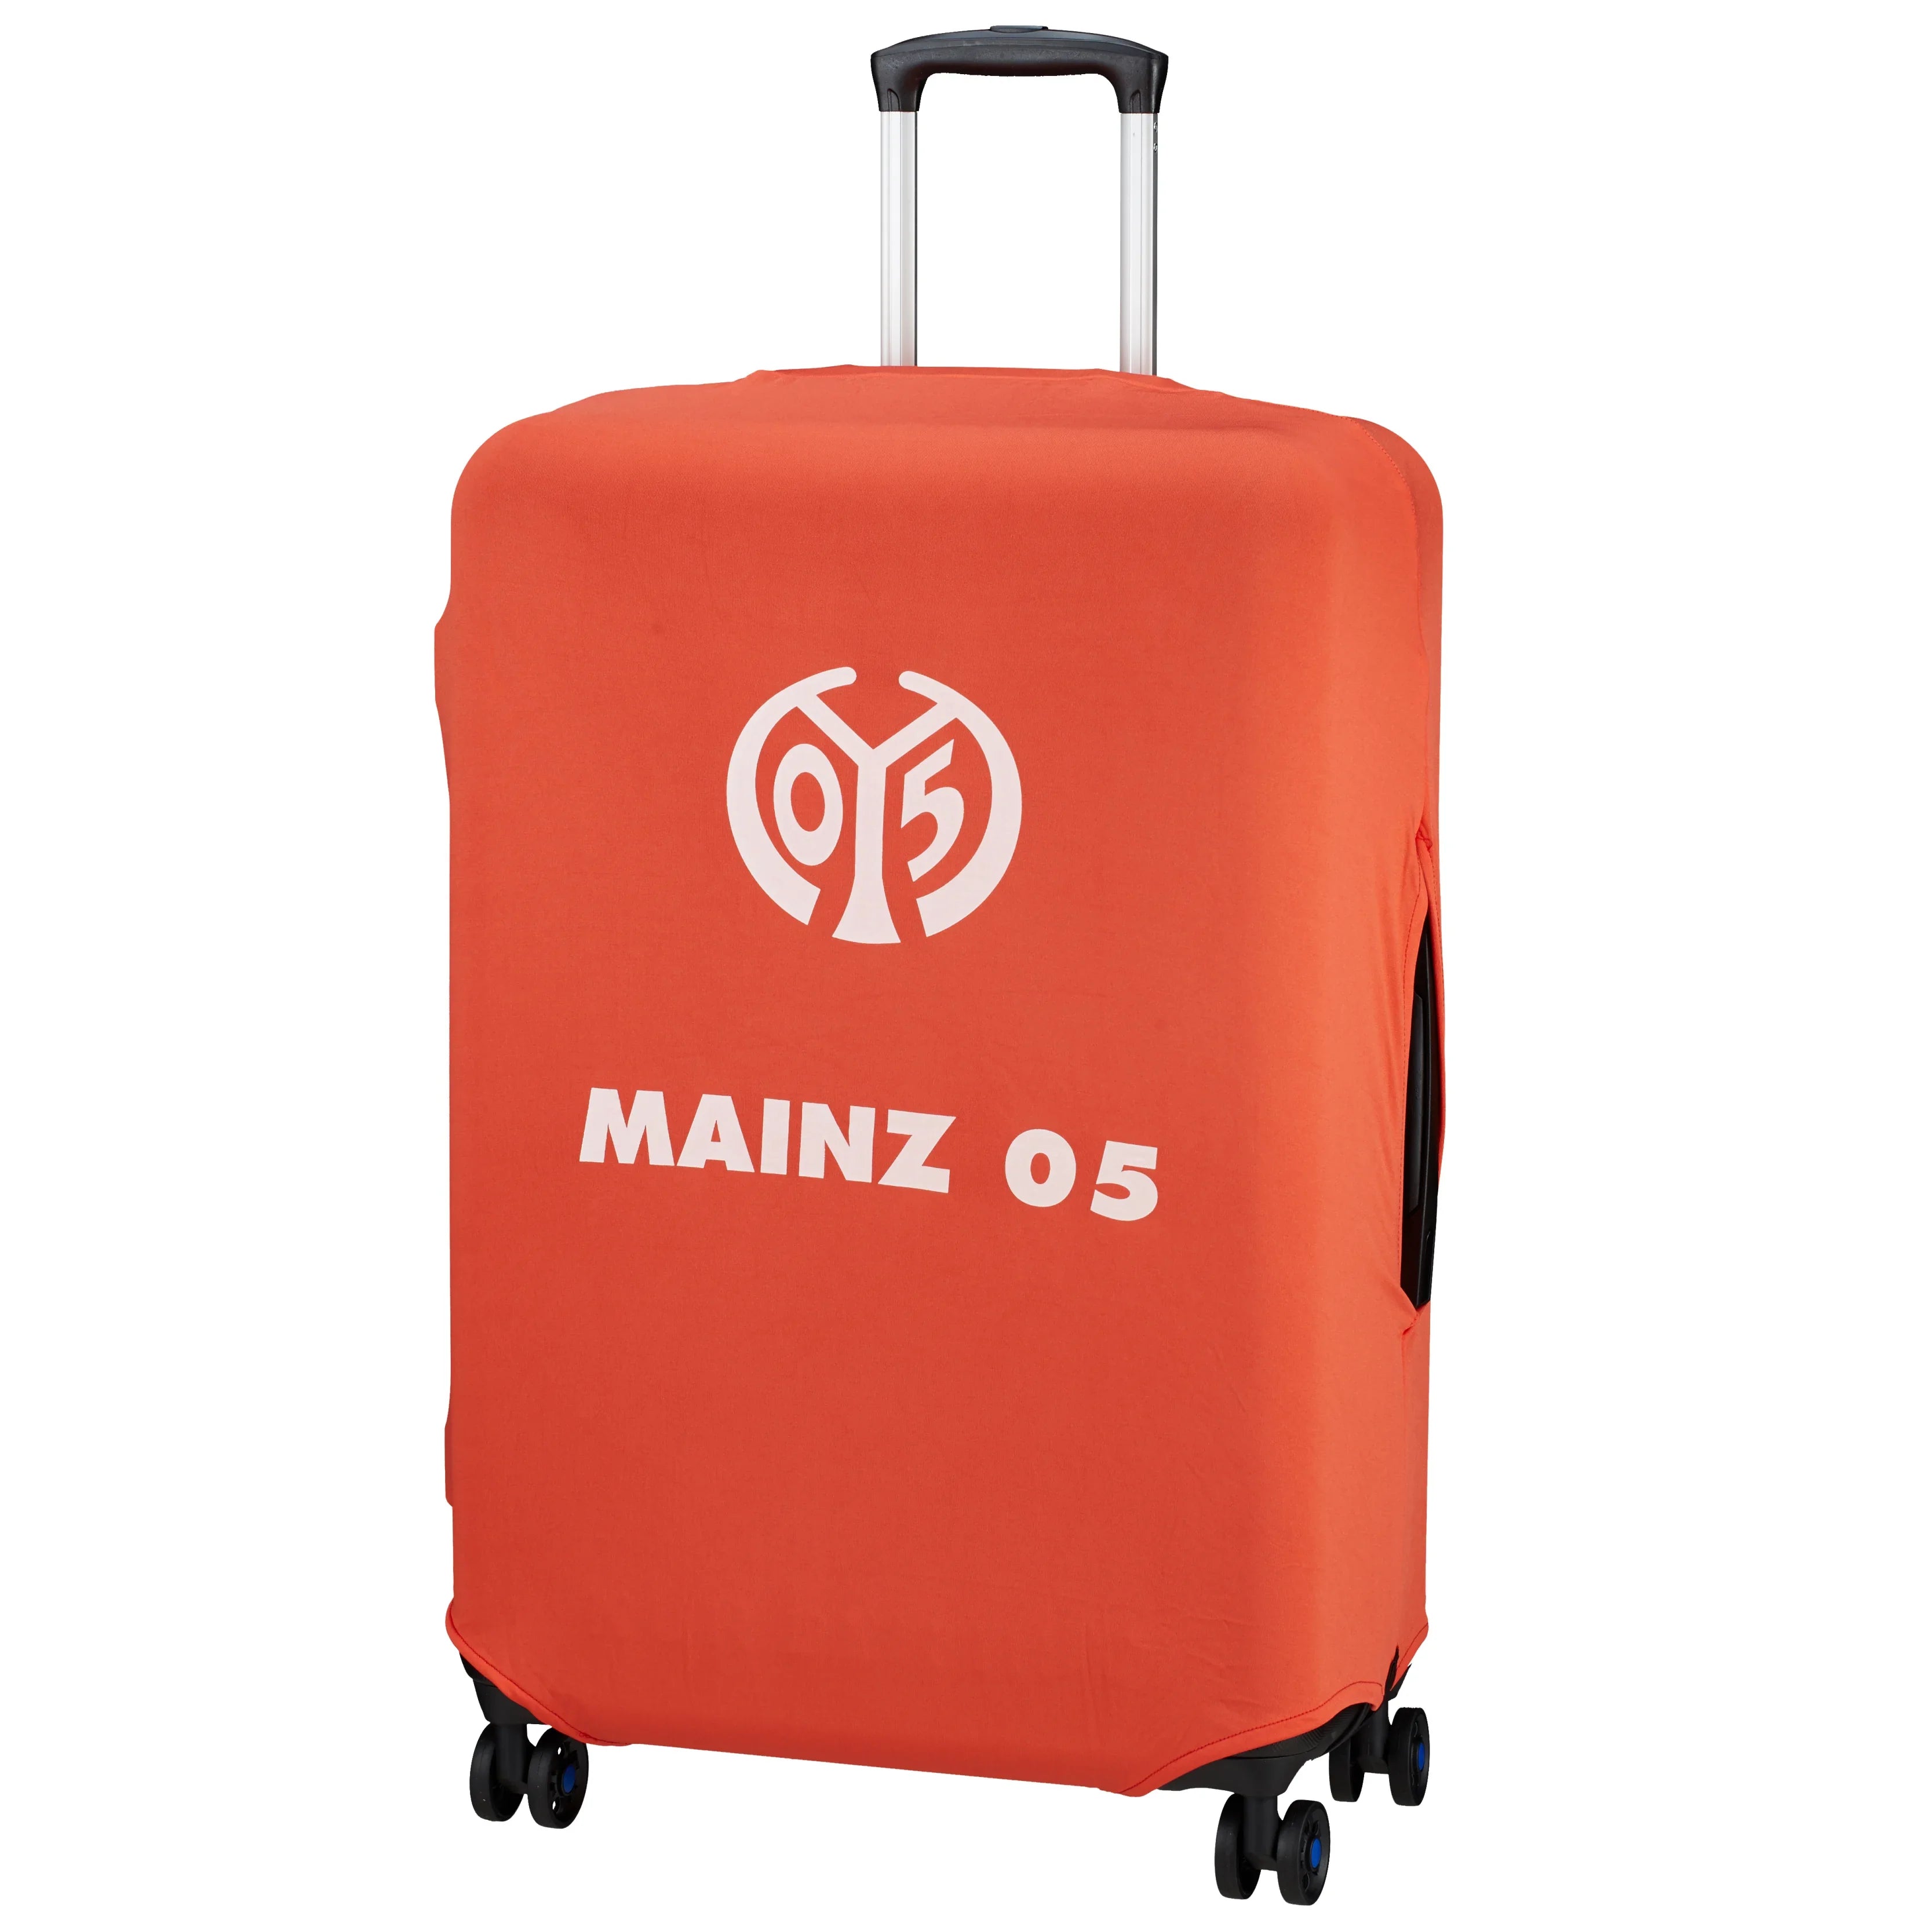 Housse de valise My club Mainz 05 77 cm - Mayence 05